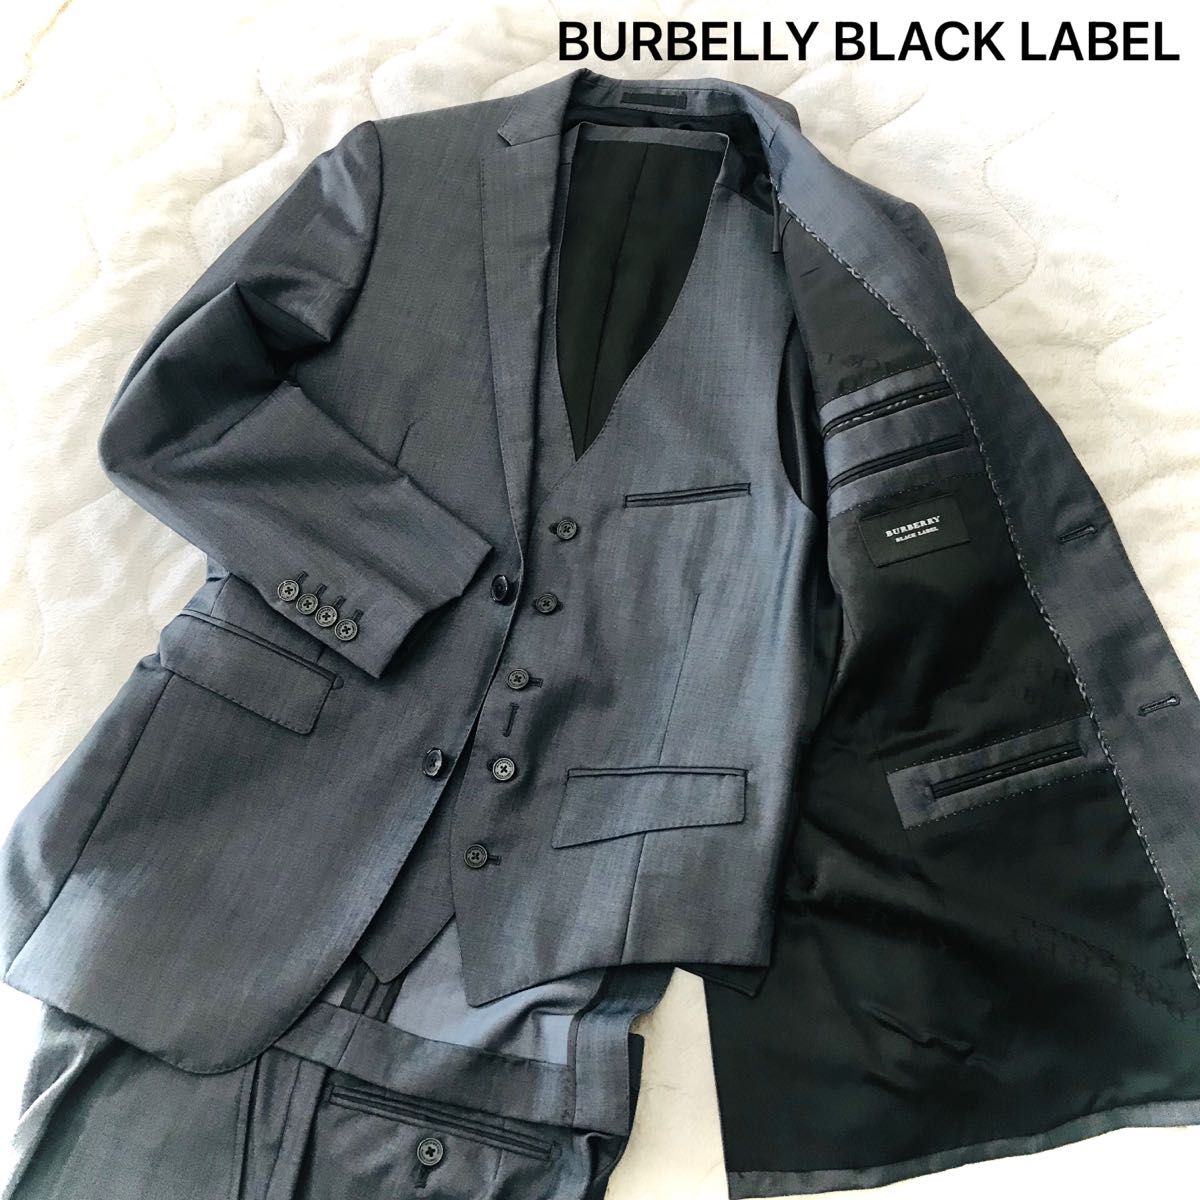 BURBERRY BLACK LABEL 3ピーススーツ - スーツ